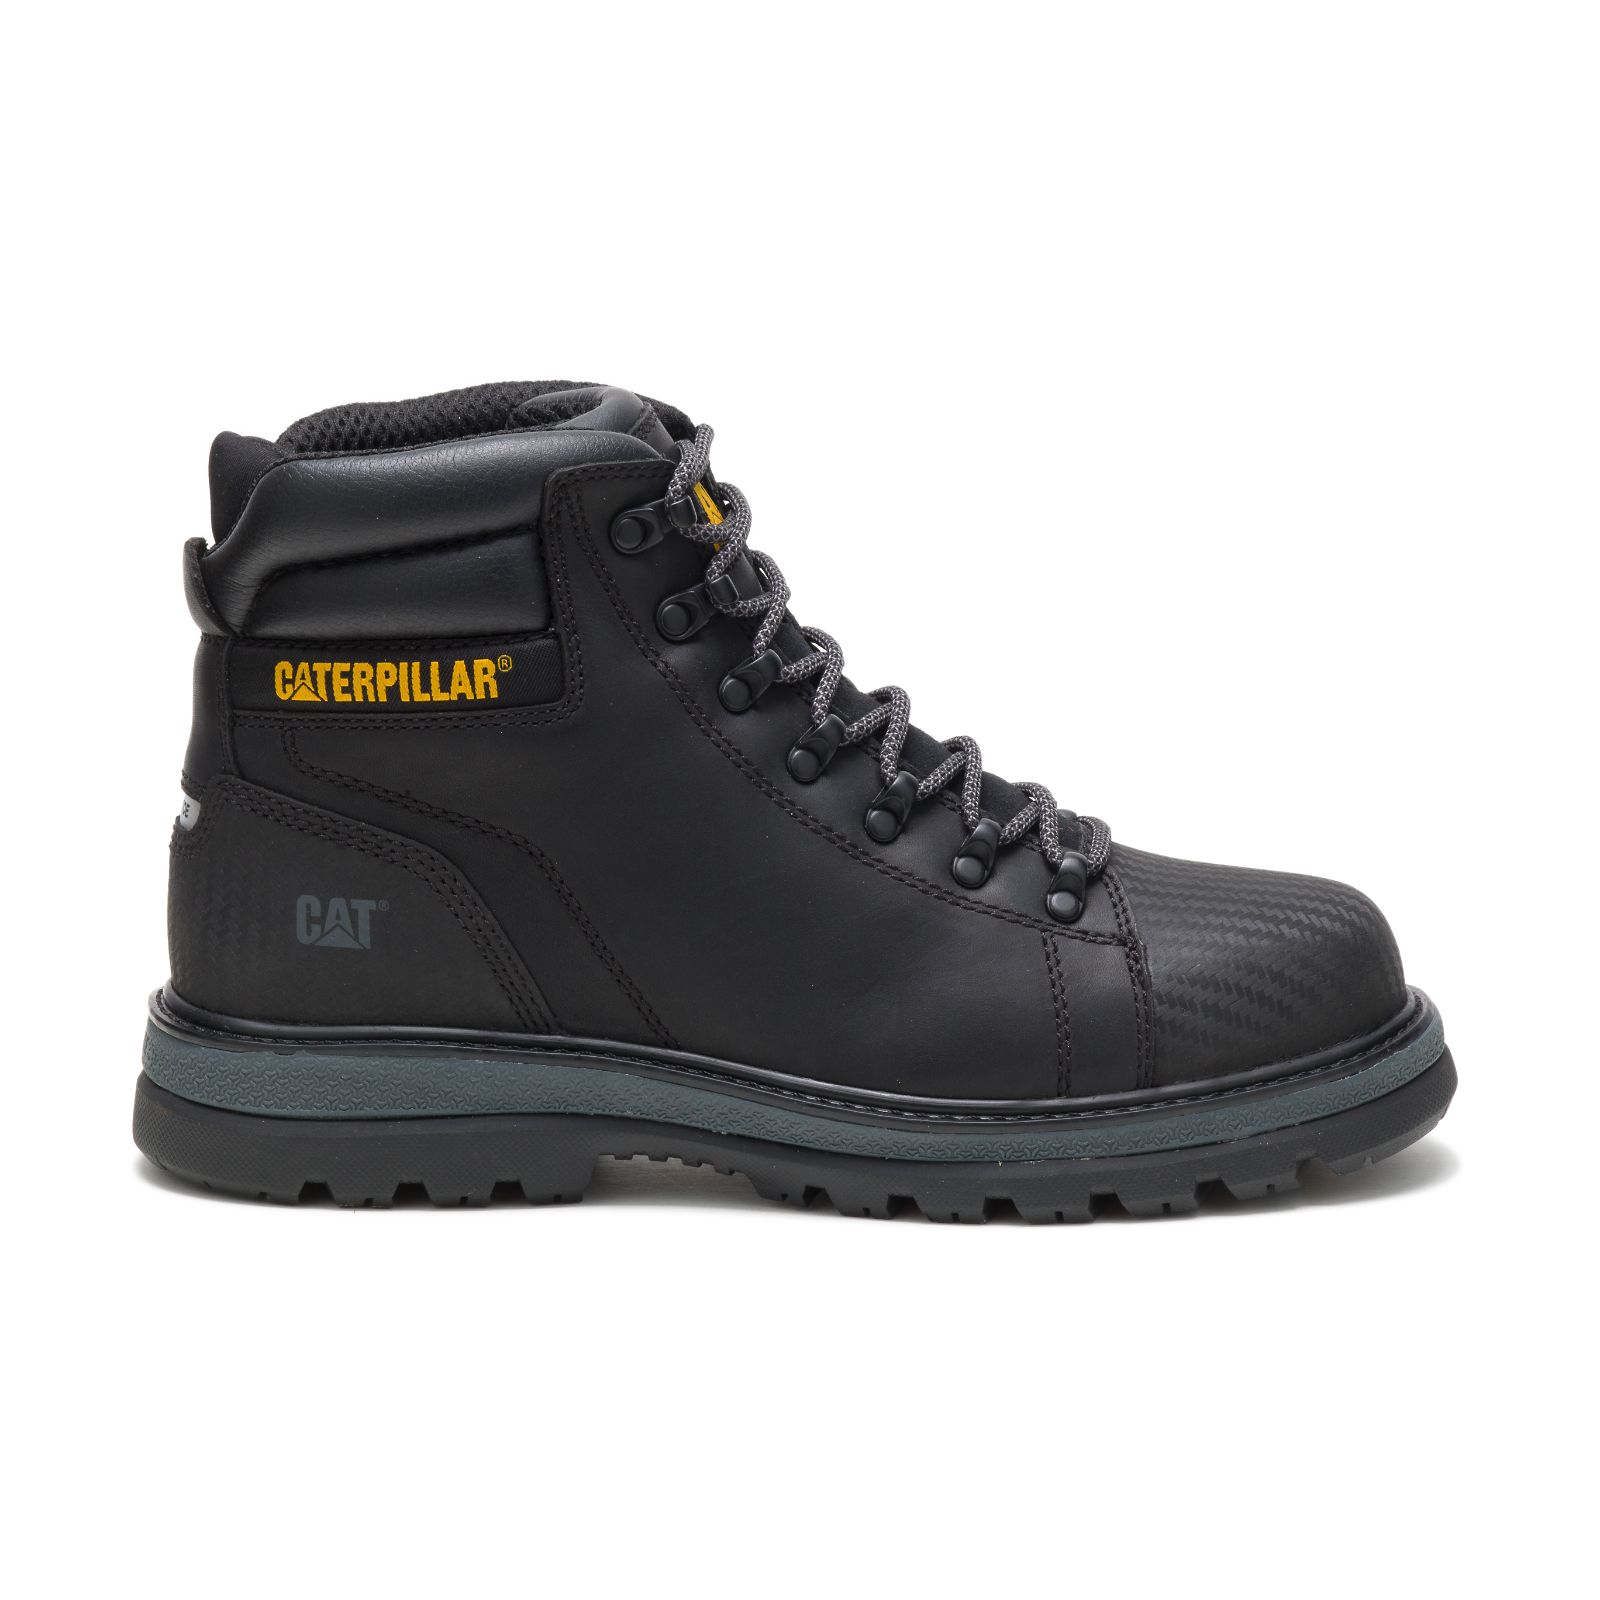 Caterpillar Work Boots Online UAE - Caterpillar Foxfield Steel Toe Mens - Black EXQUKJ095